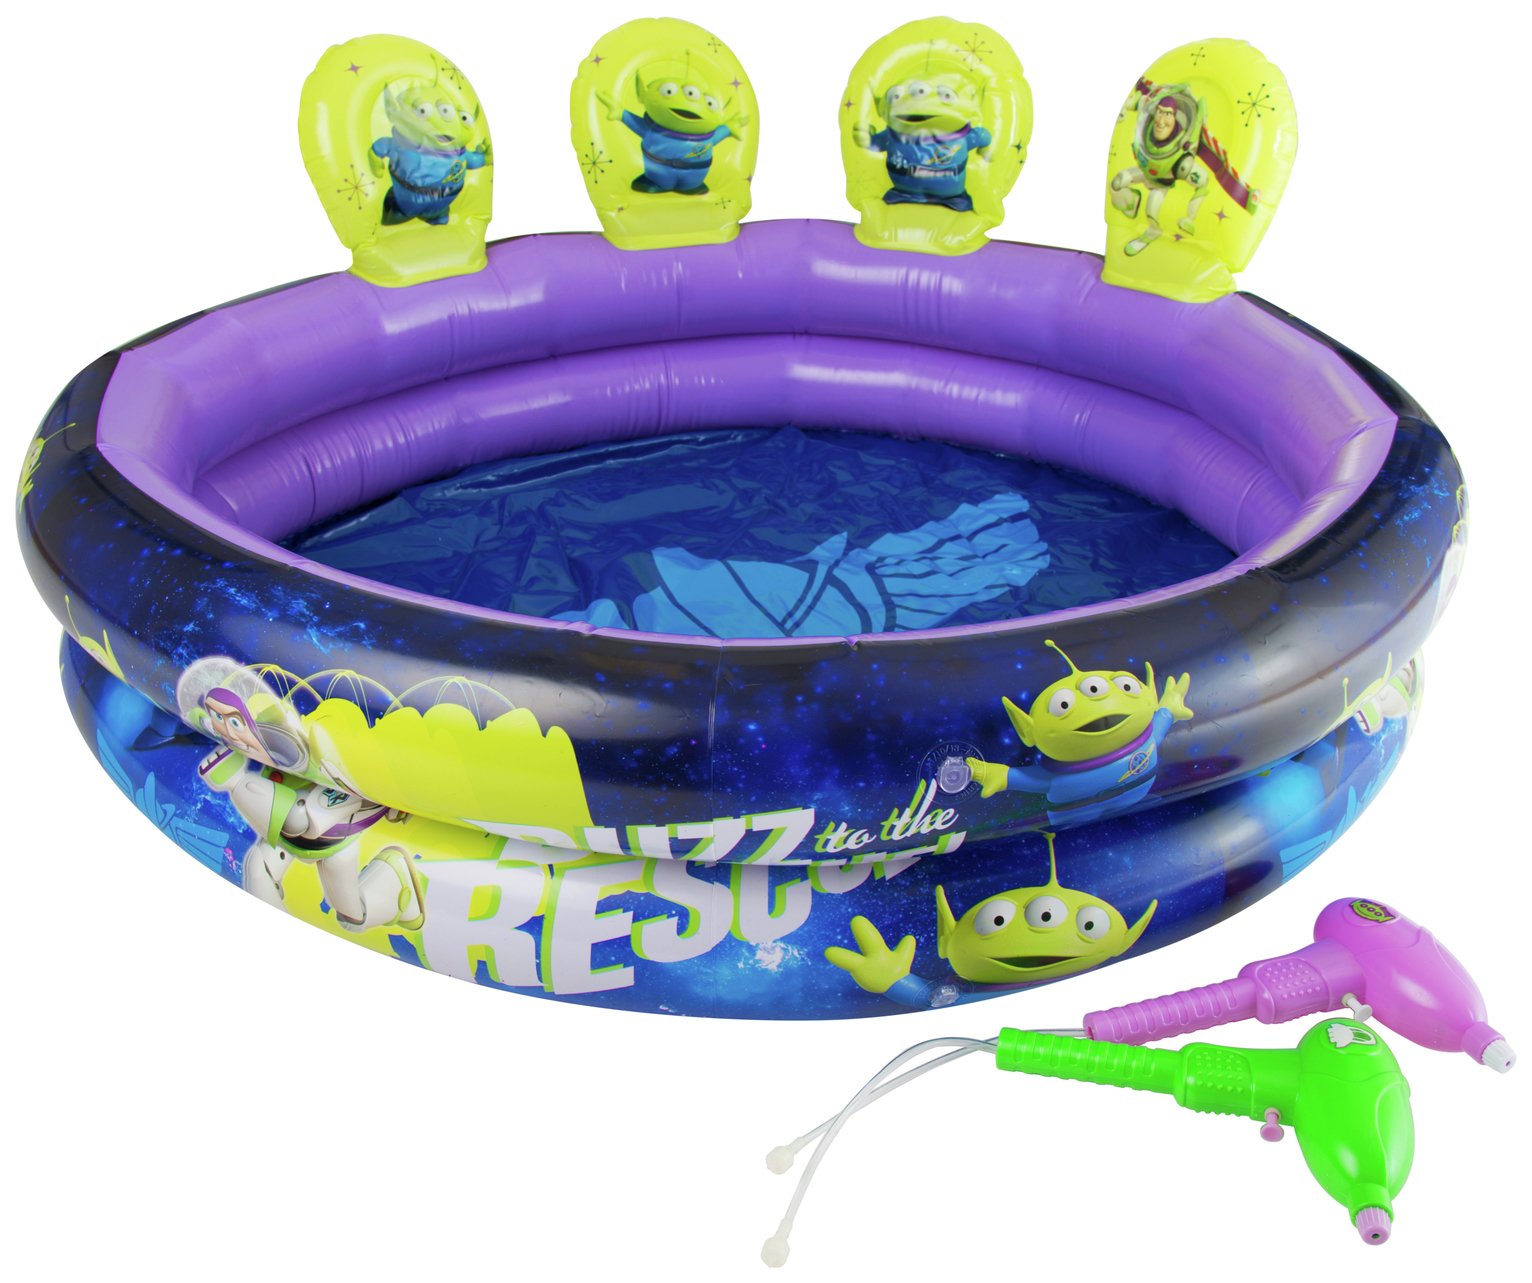 toy story paddling pool